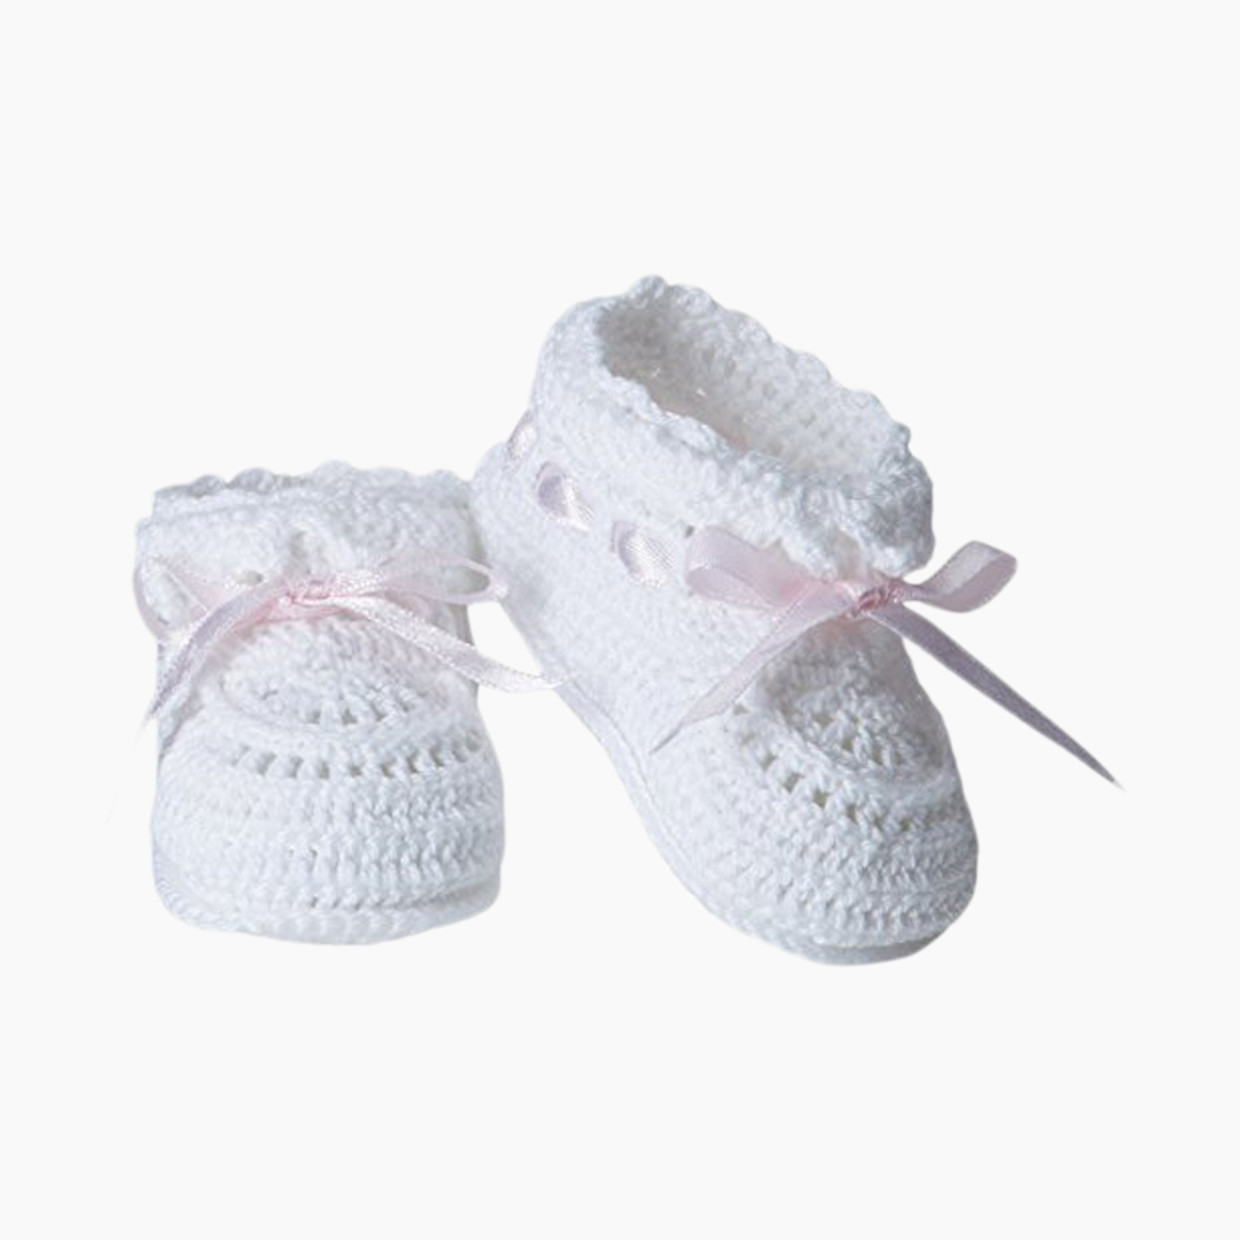 Jefferies Socks Hand Crochet Bootie - White/Pink, 0-6 Months.